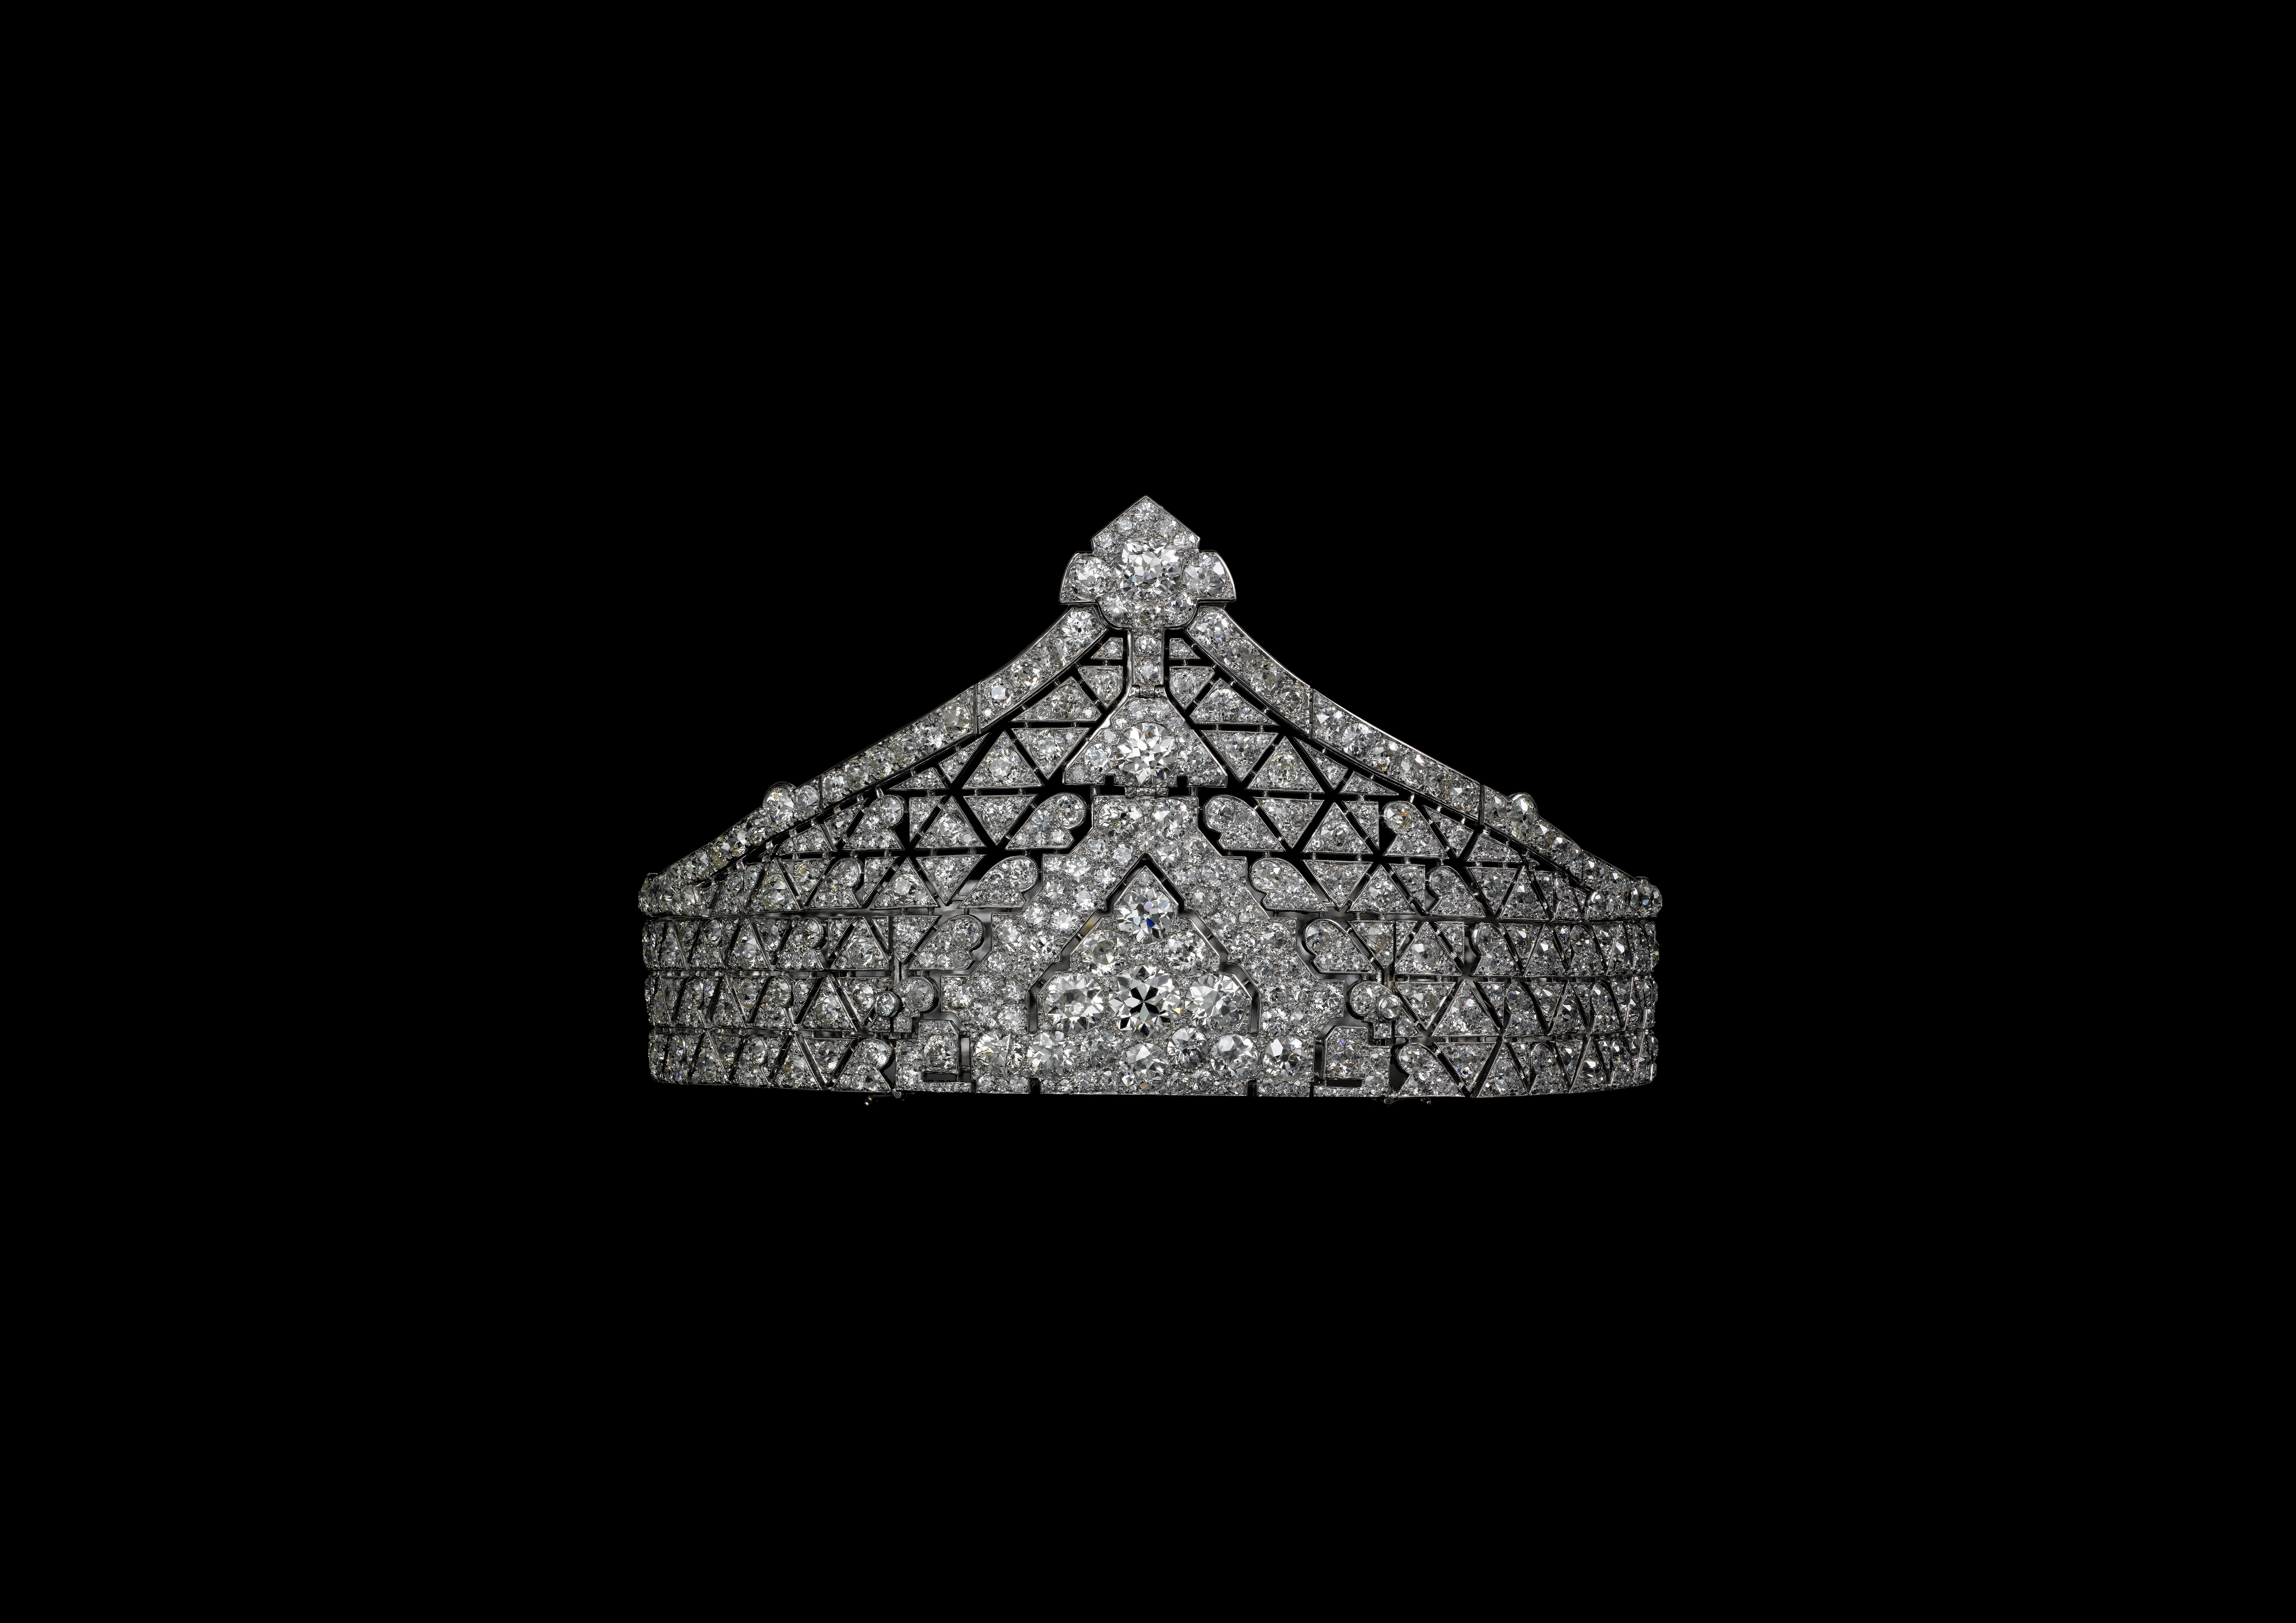 Bandeau, Cartier Paris, special order, 1923. Platinum, diamonds. Made as a special order for Madame Ossa Ross. Cartier Collection. Vincent Wulveryck, Cartier Collection © Cartier 